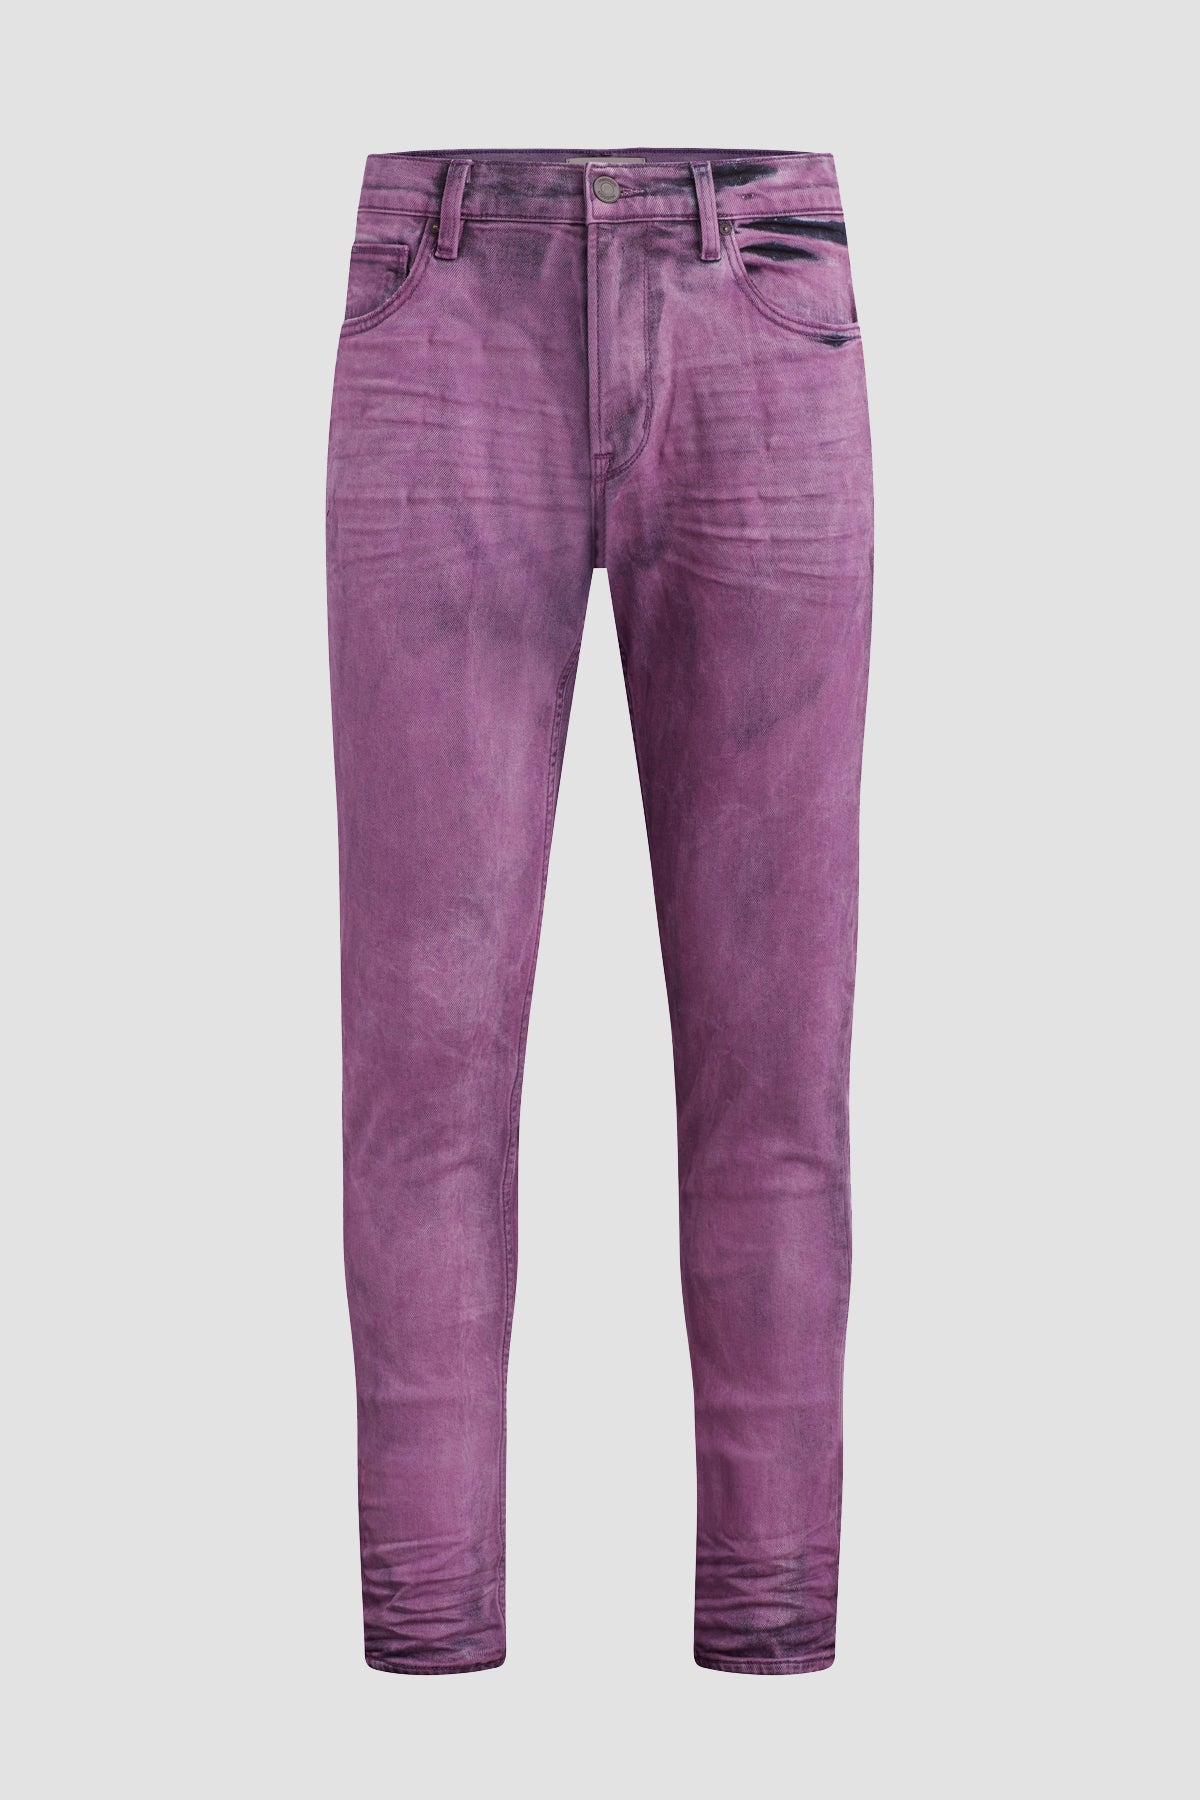 buy shop store Purple brand jeans sz 36